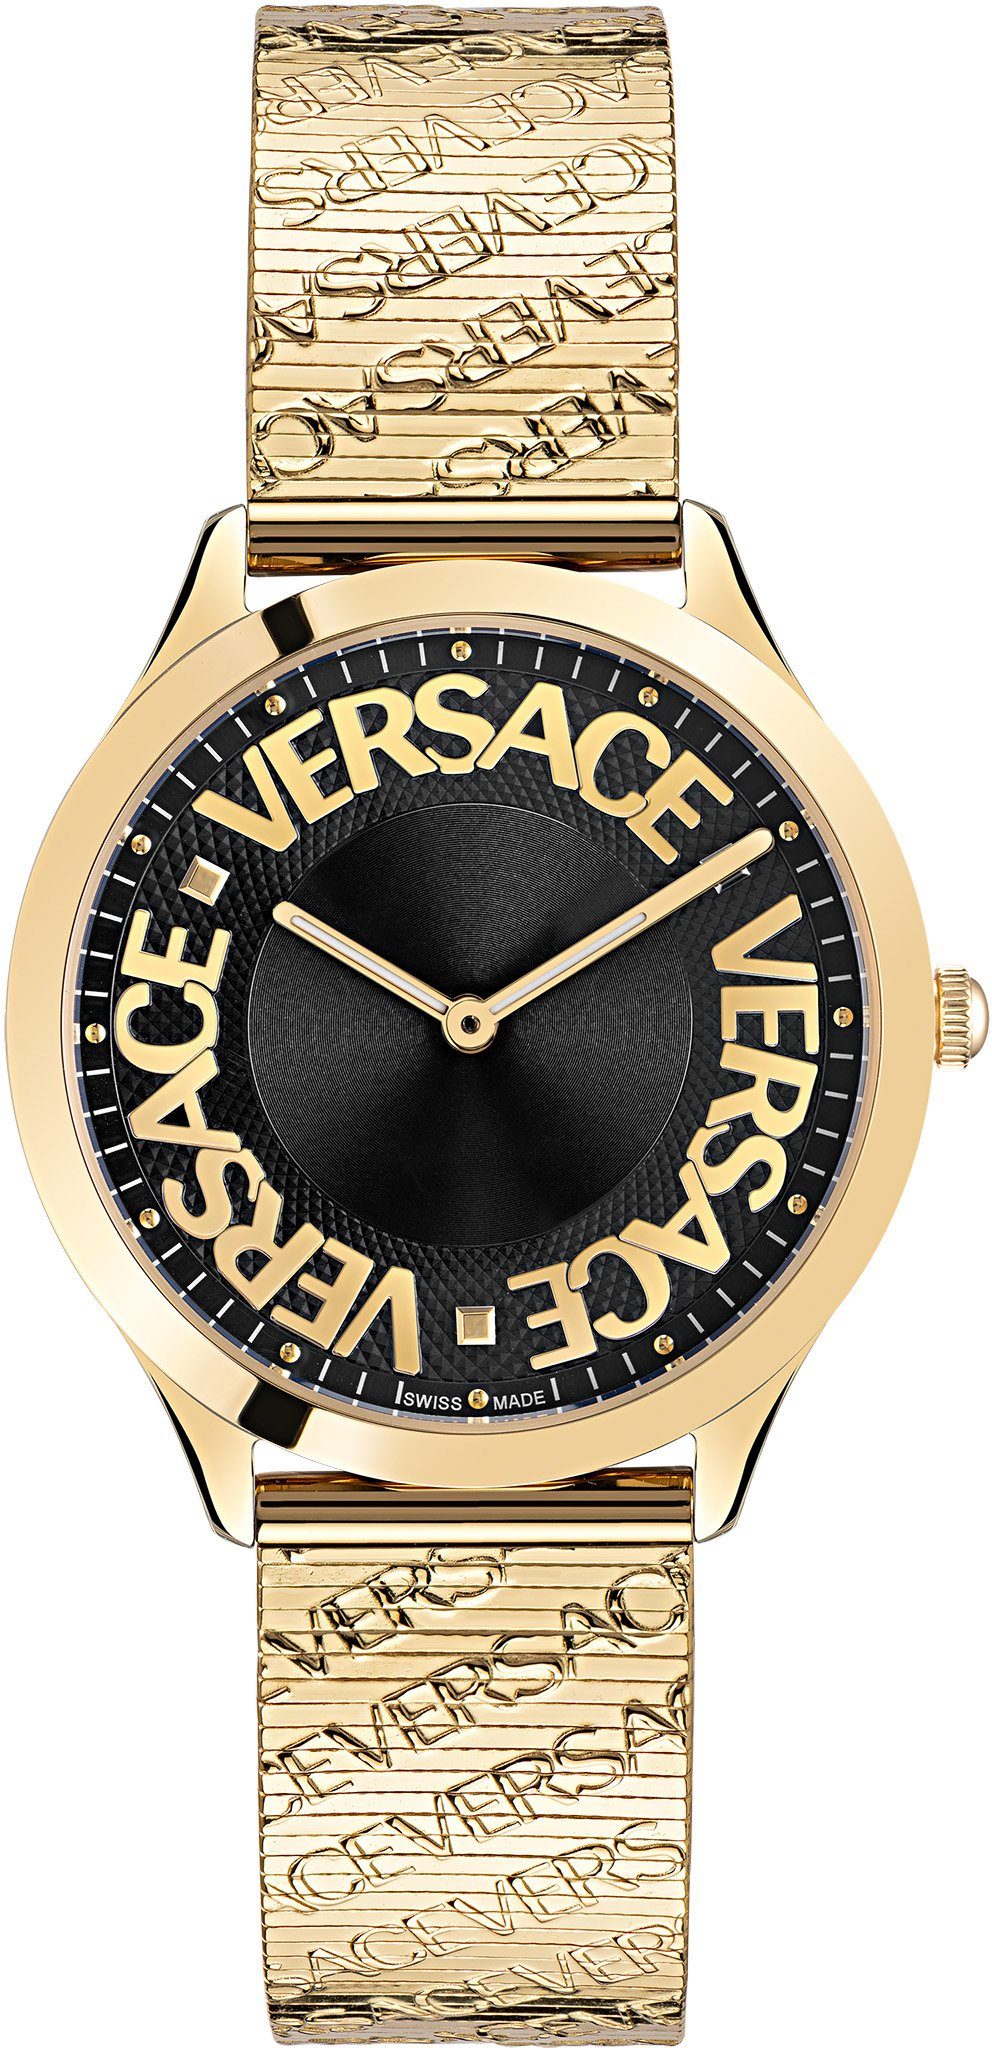 Versace Quarzuhr LOGO HALO, VE2O00522, Armbanduhr, Damenuhr, Saphirglas, Swiss Made, Leuchtzeiger